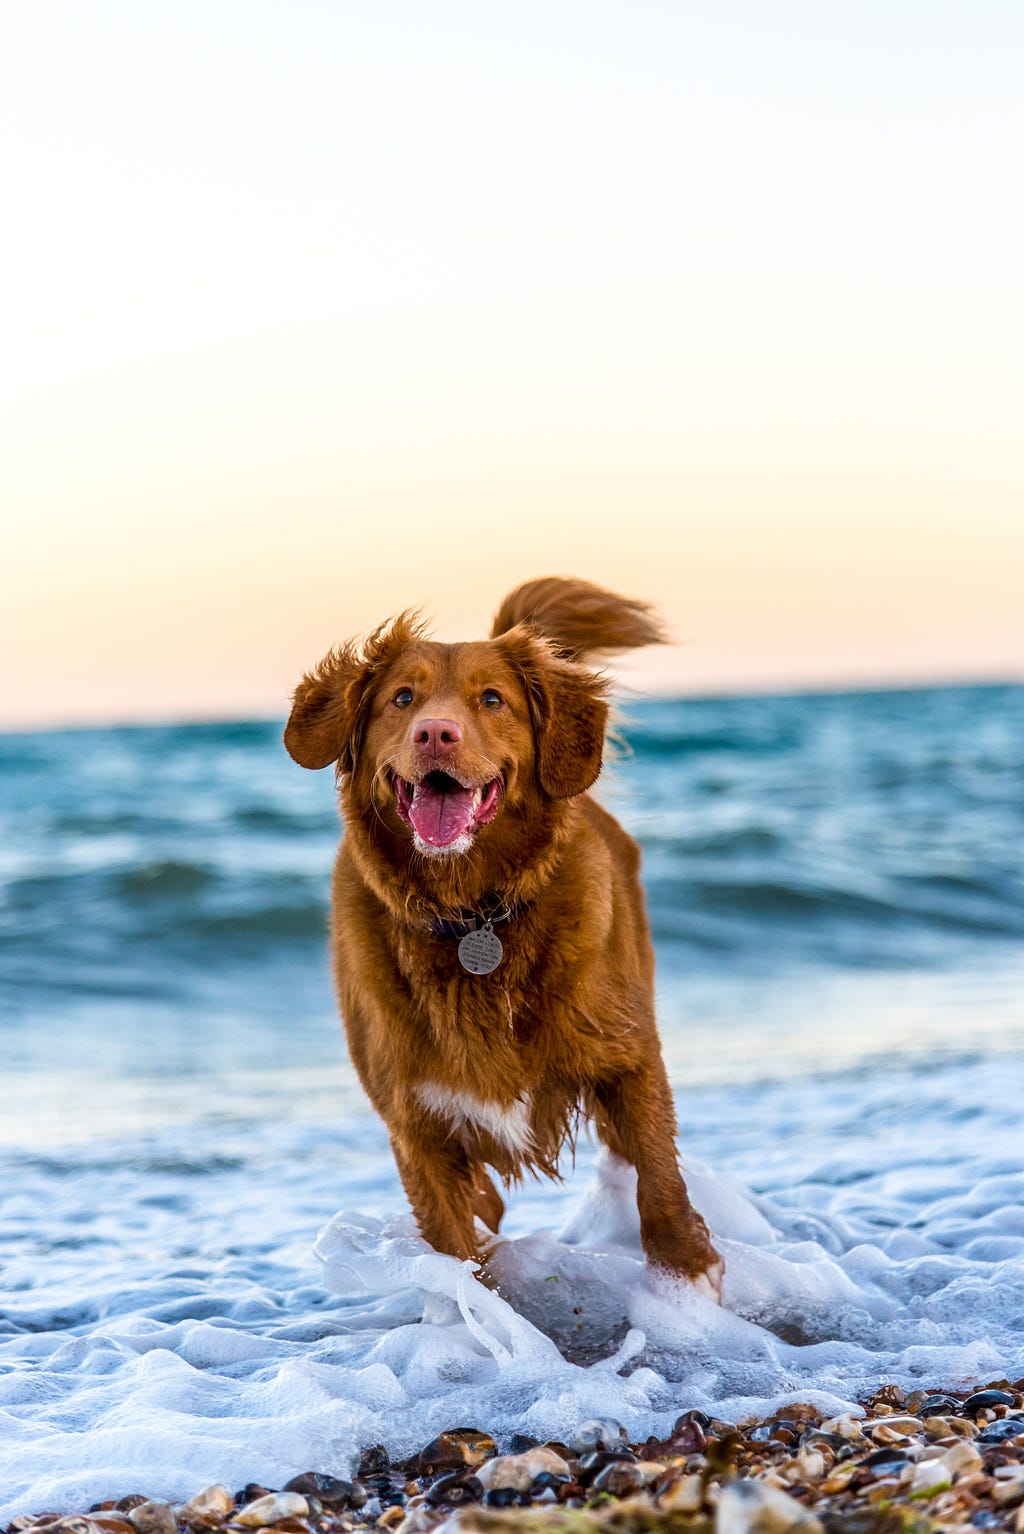 A dog running in beach